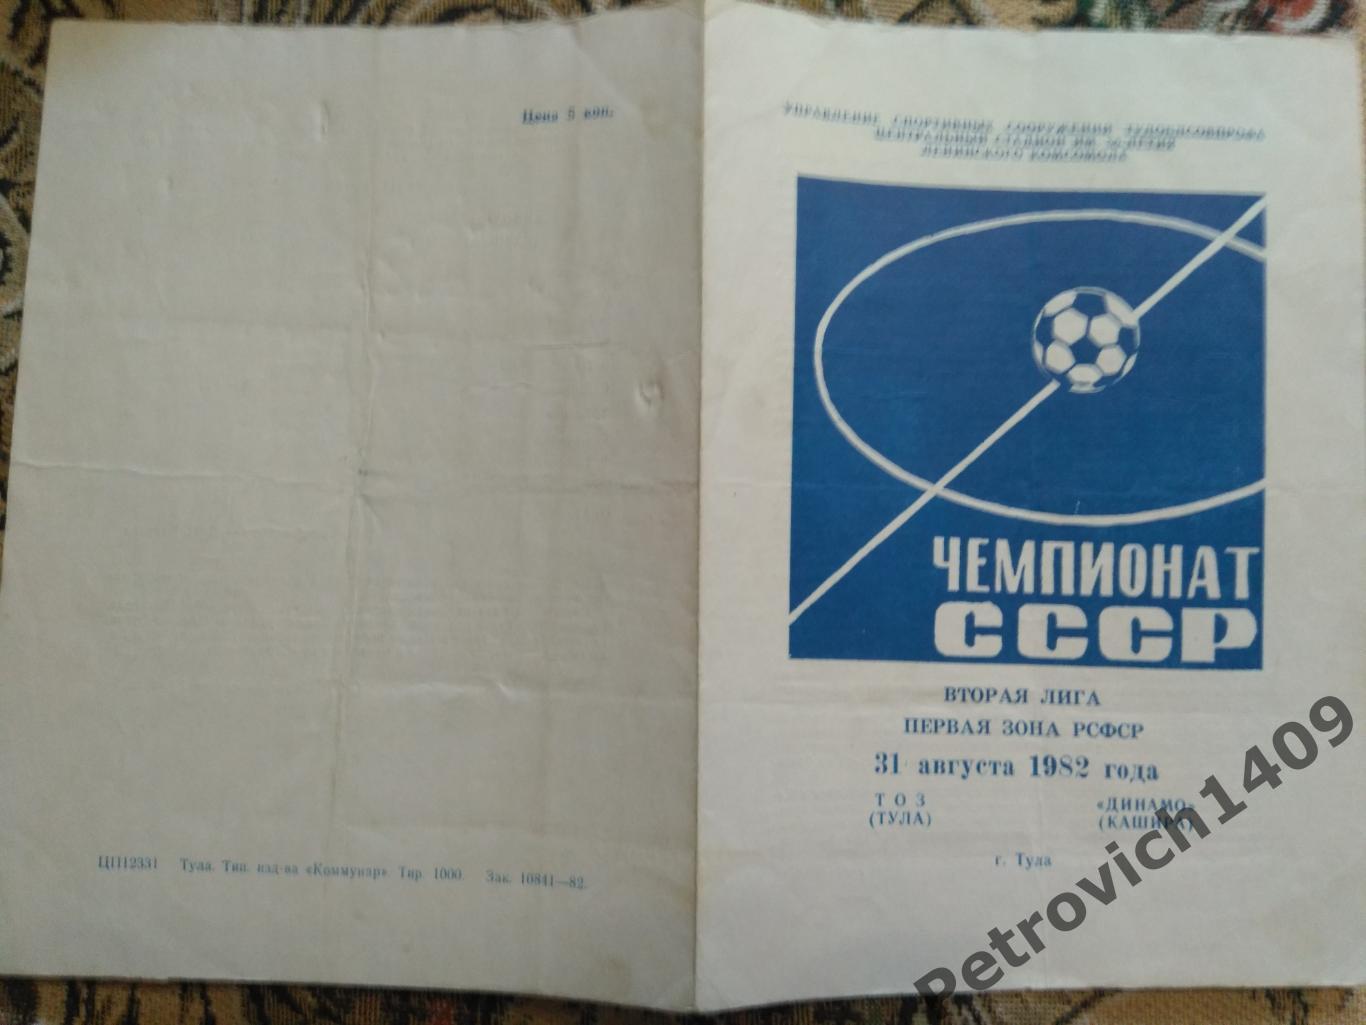 ТОЗ Тула - Динамо Кашира 31 августа 1982 год